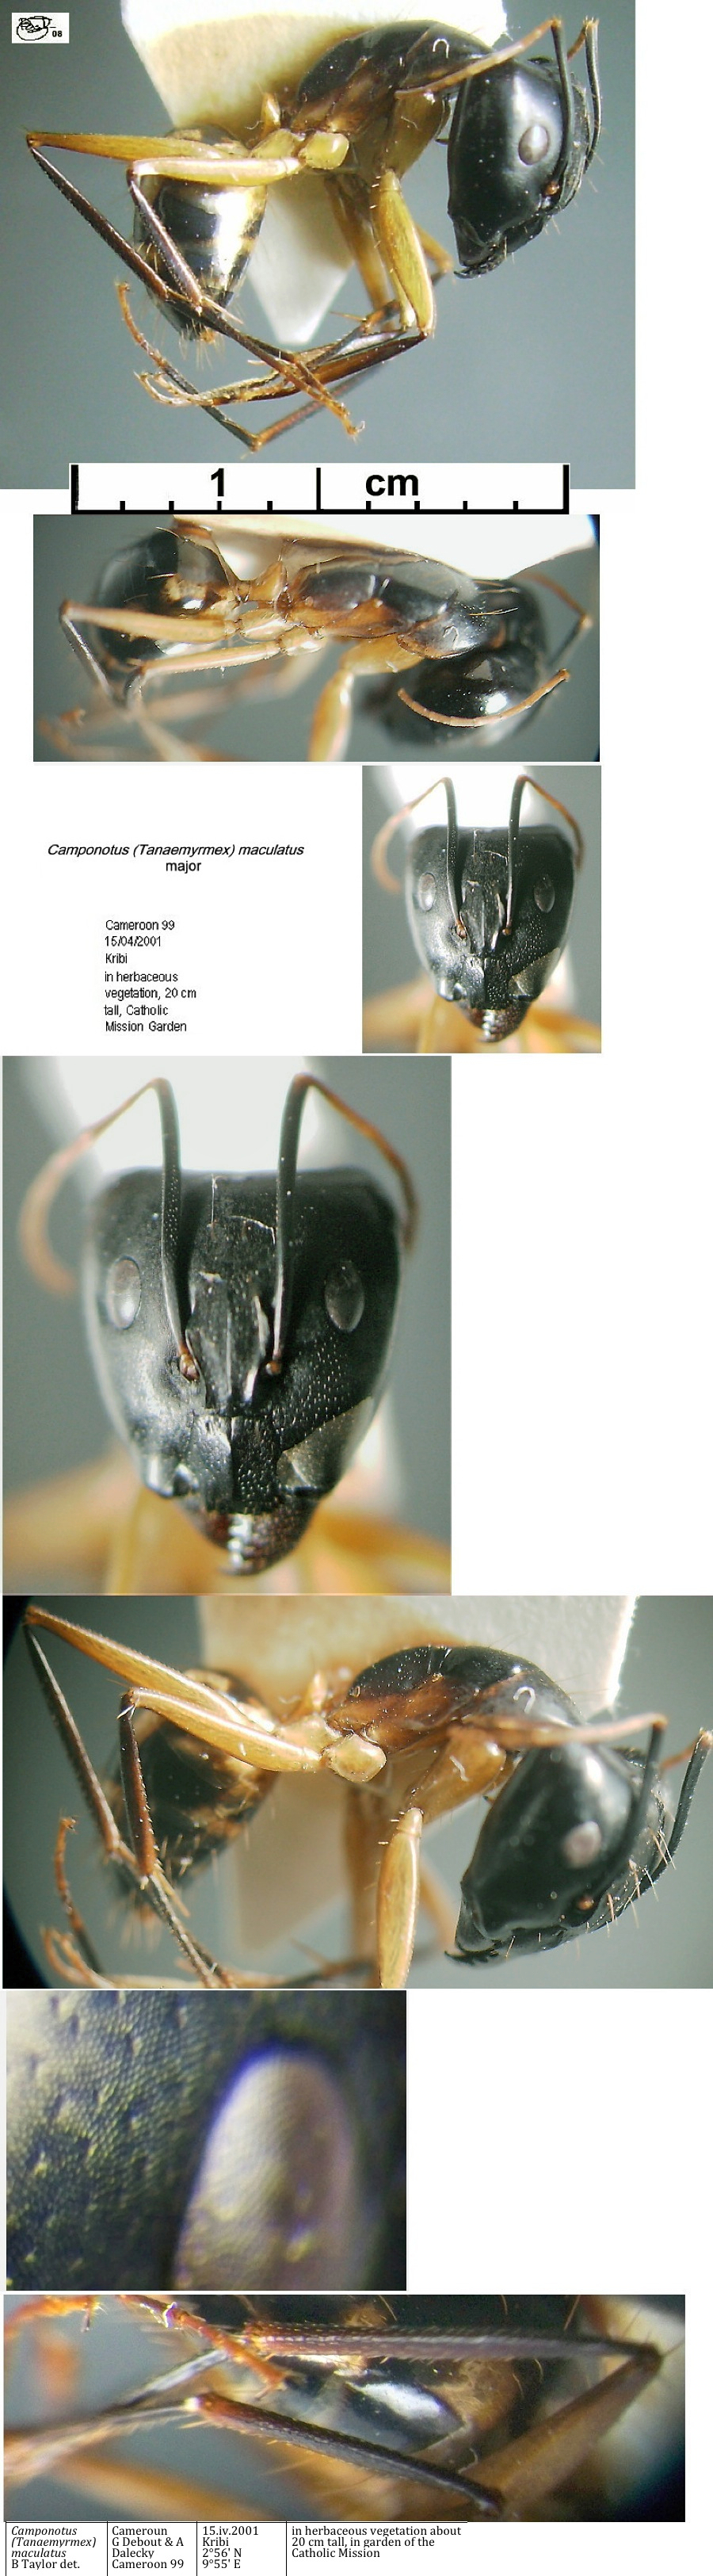 {Camponotus maculatus major}